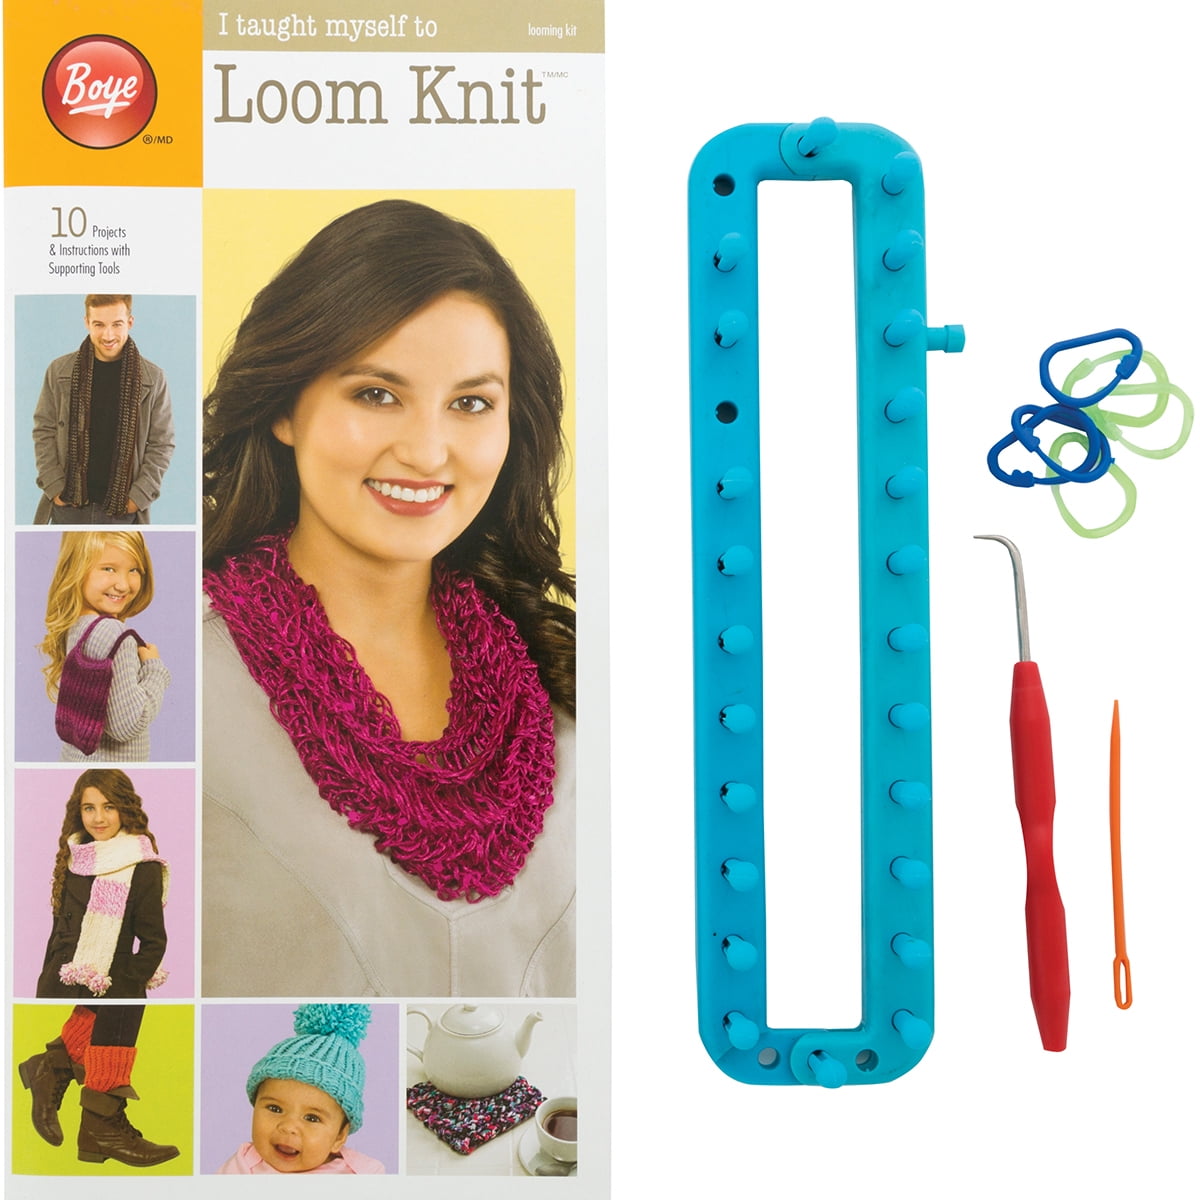 Simplicity Boye I Taught Myself to Loom Knit Kit 